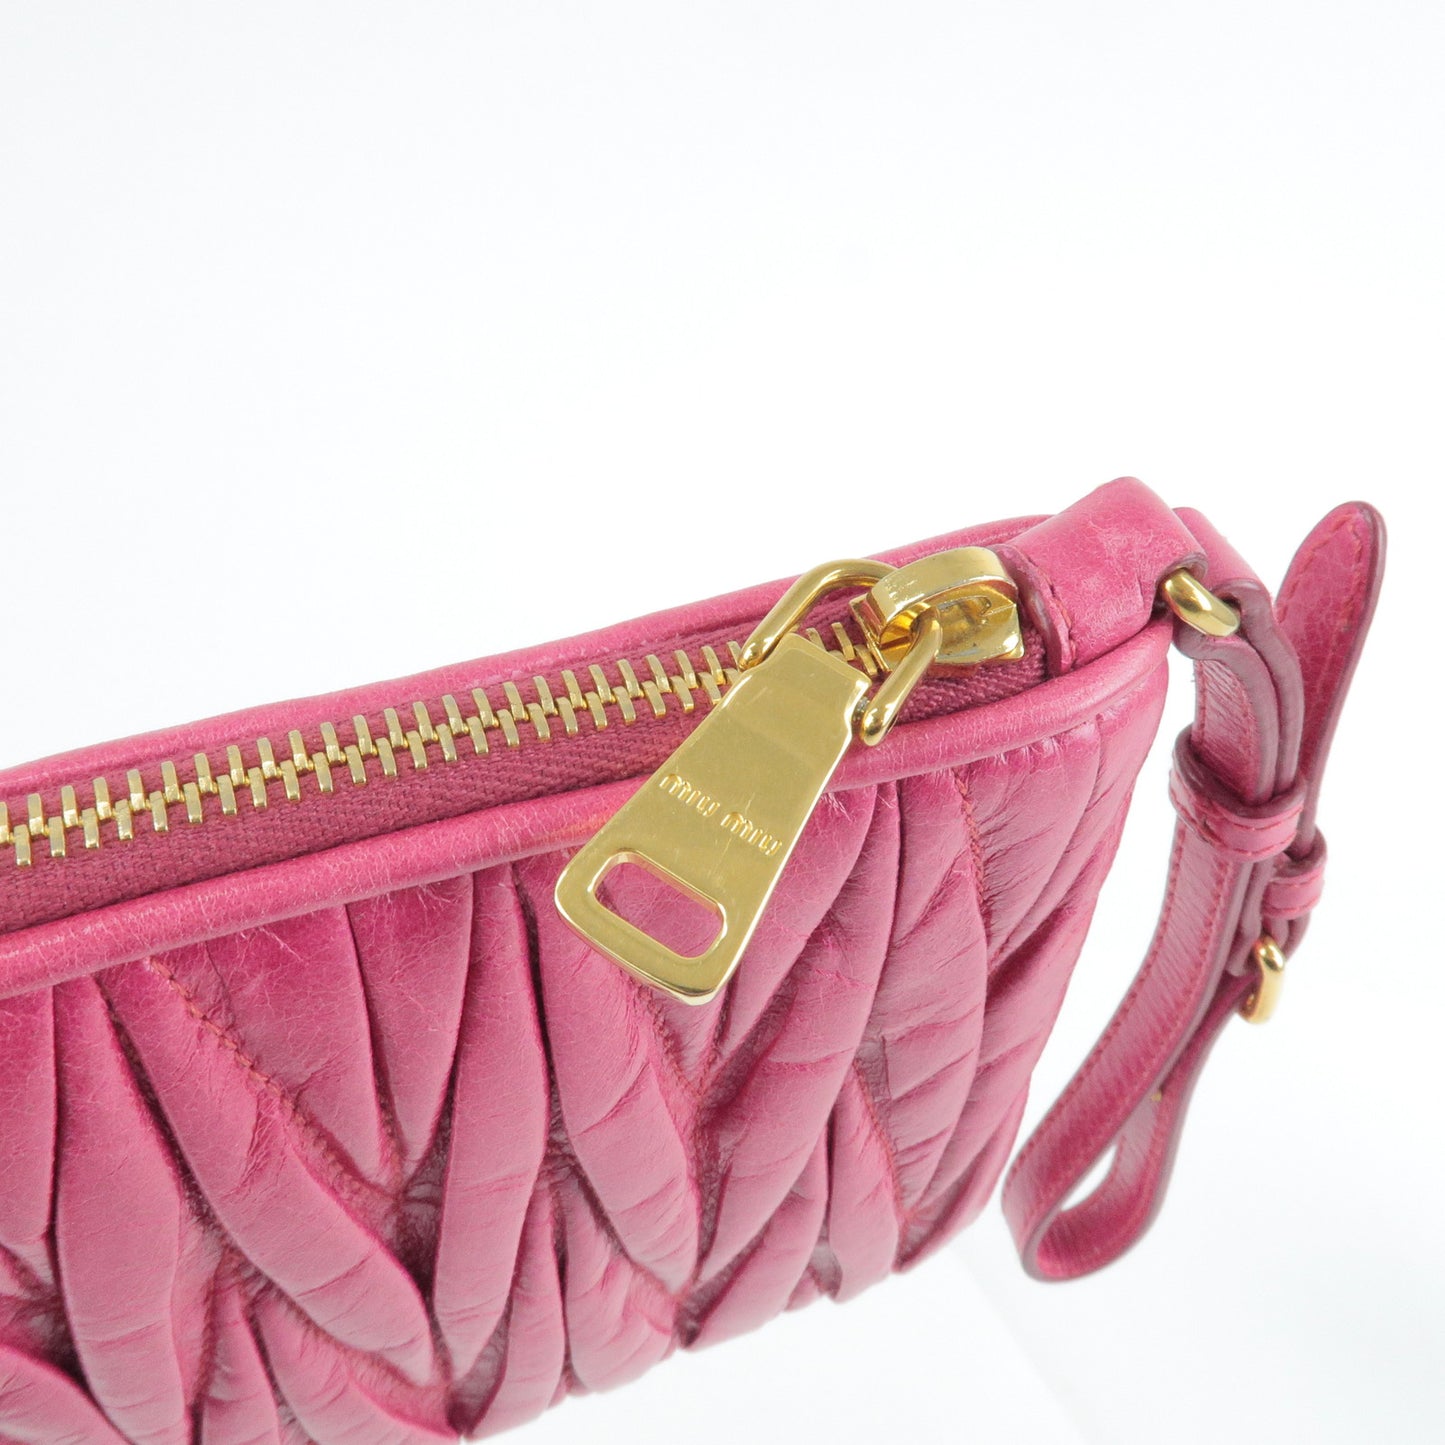 MIU MIU Matellase Leather Pouch Wristlet Clutch Bag Pink